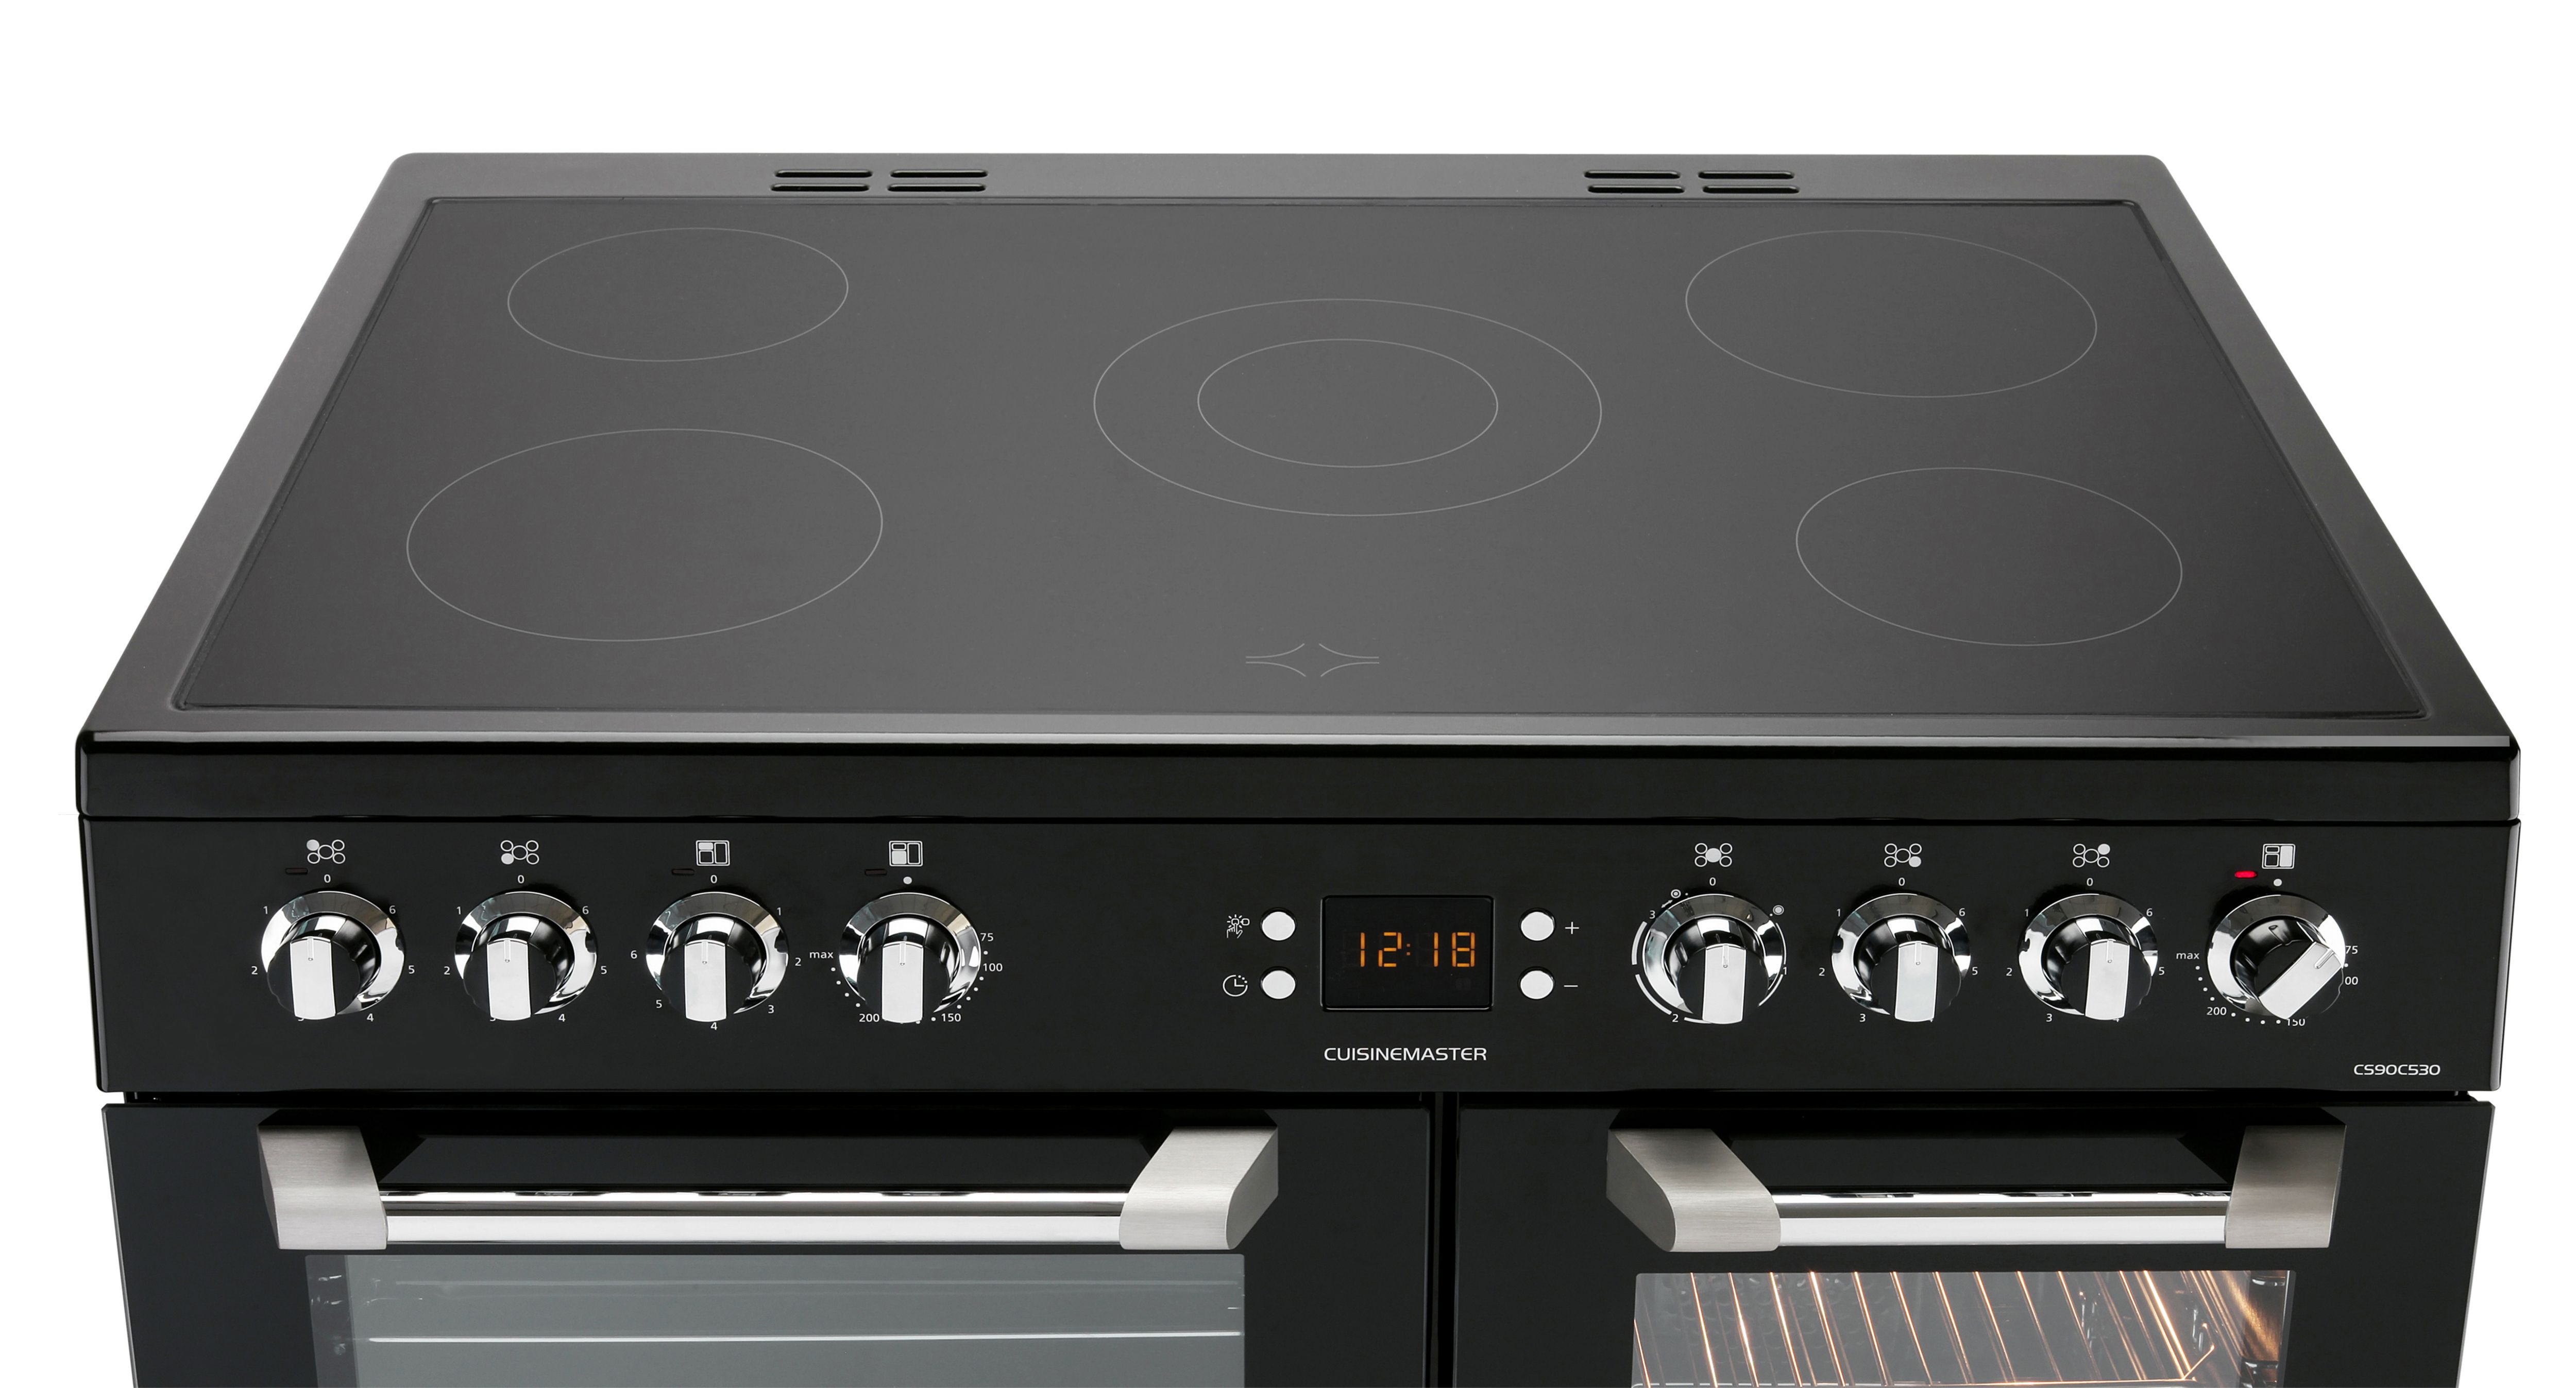 Leisure CS90C530K Freestanding Electric Range cooker with Ceramic Hob - Black